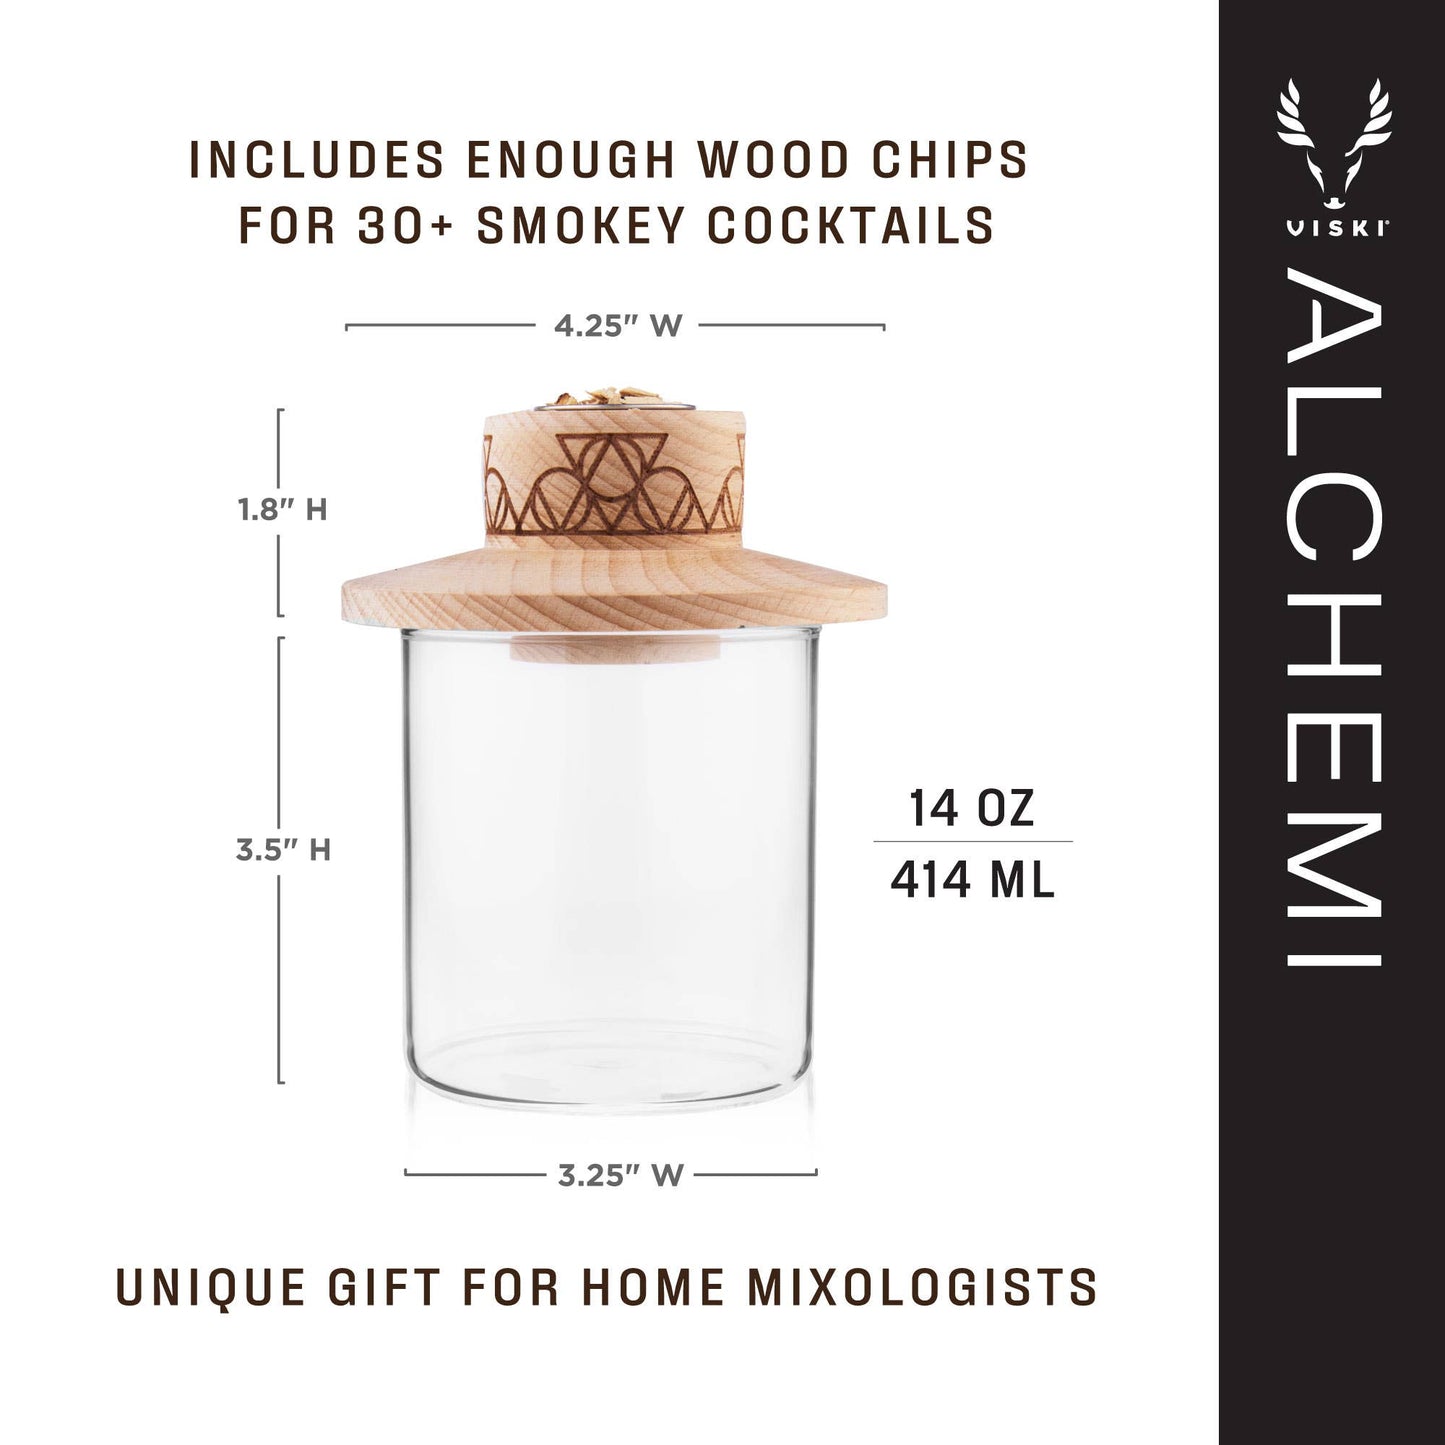 Alchemi™ Single Serve Smoker Kit